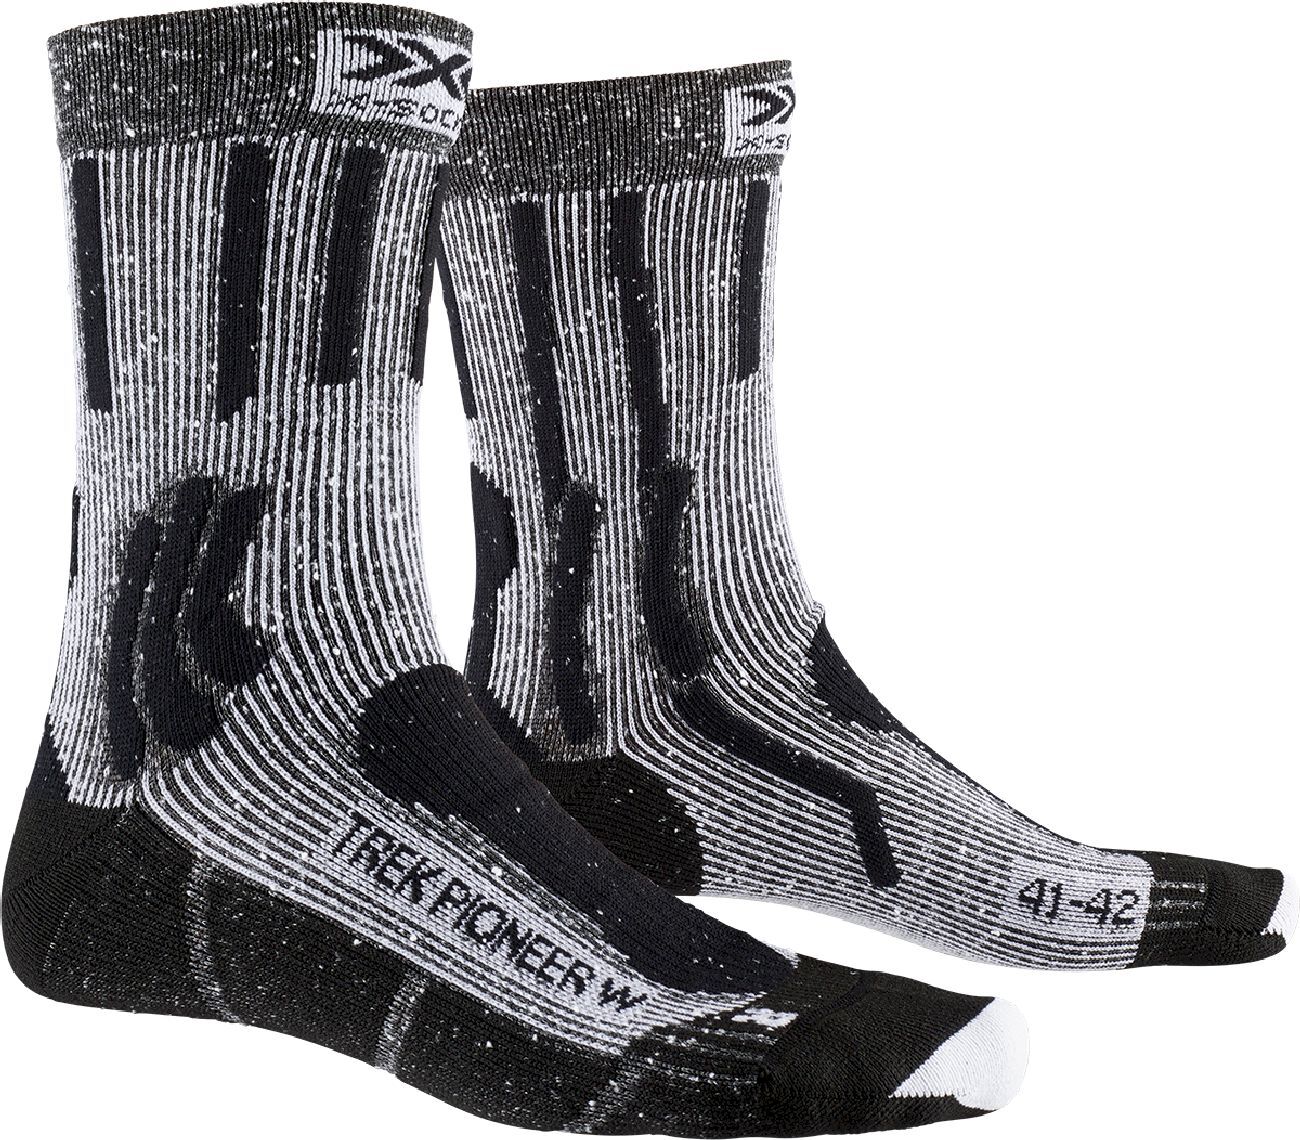 X-Socks Trek Pioneer - Hiking socks - Women's